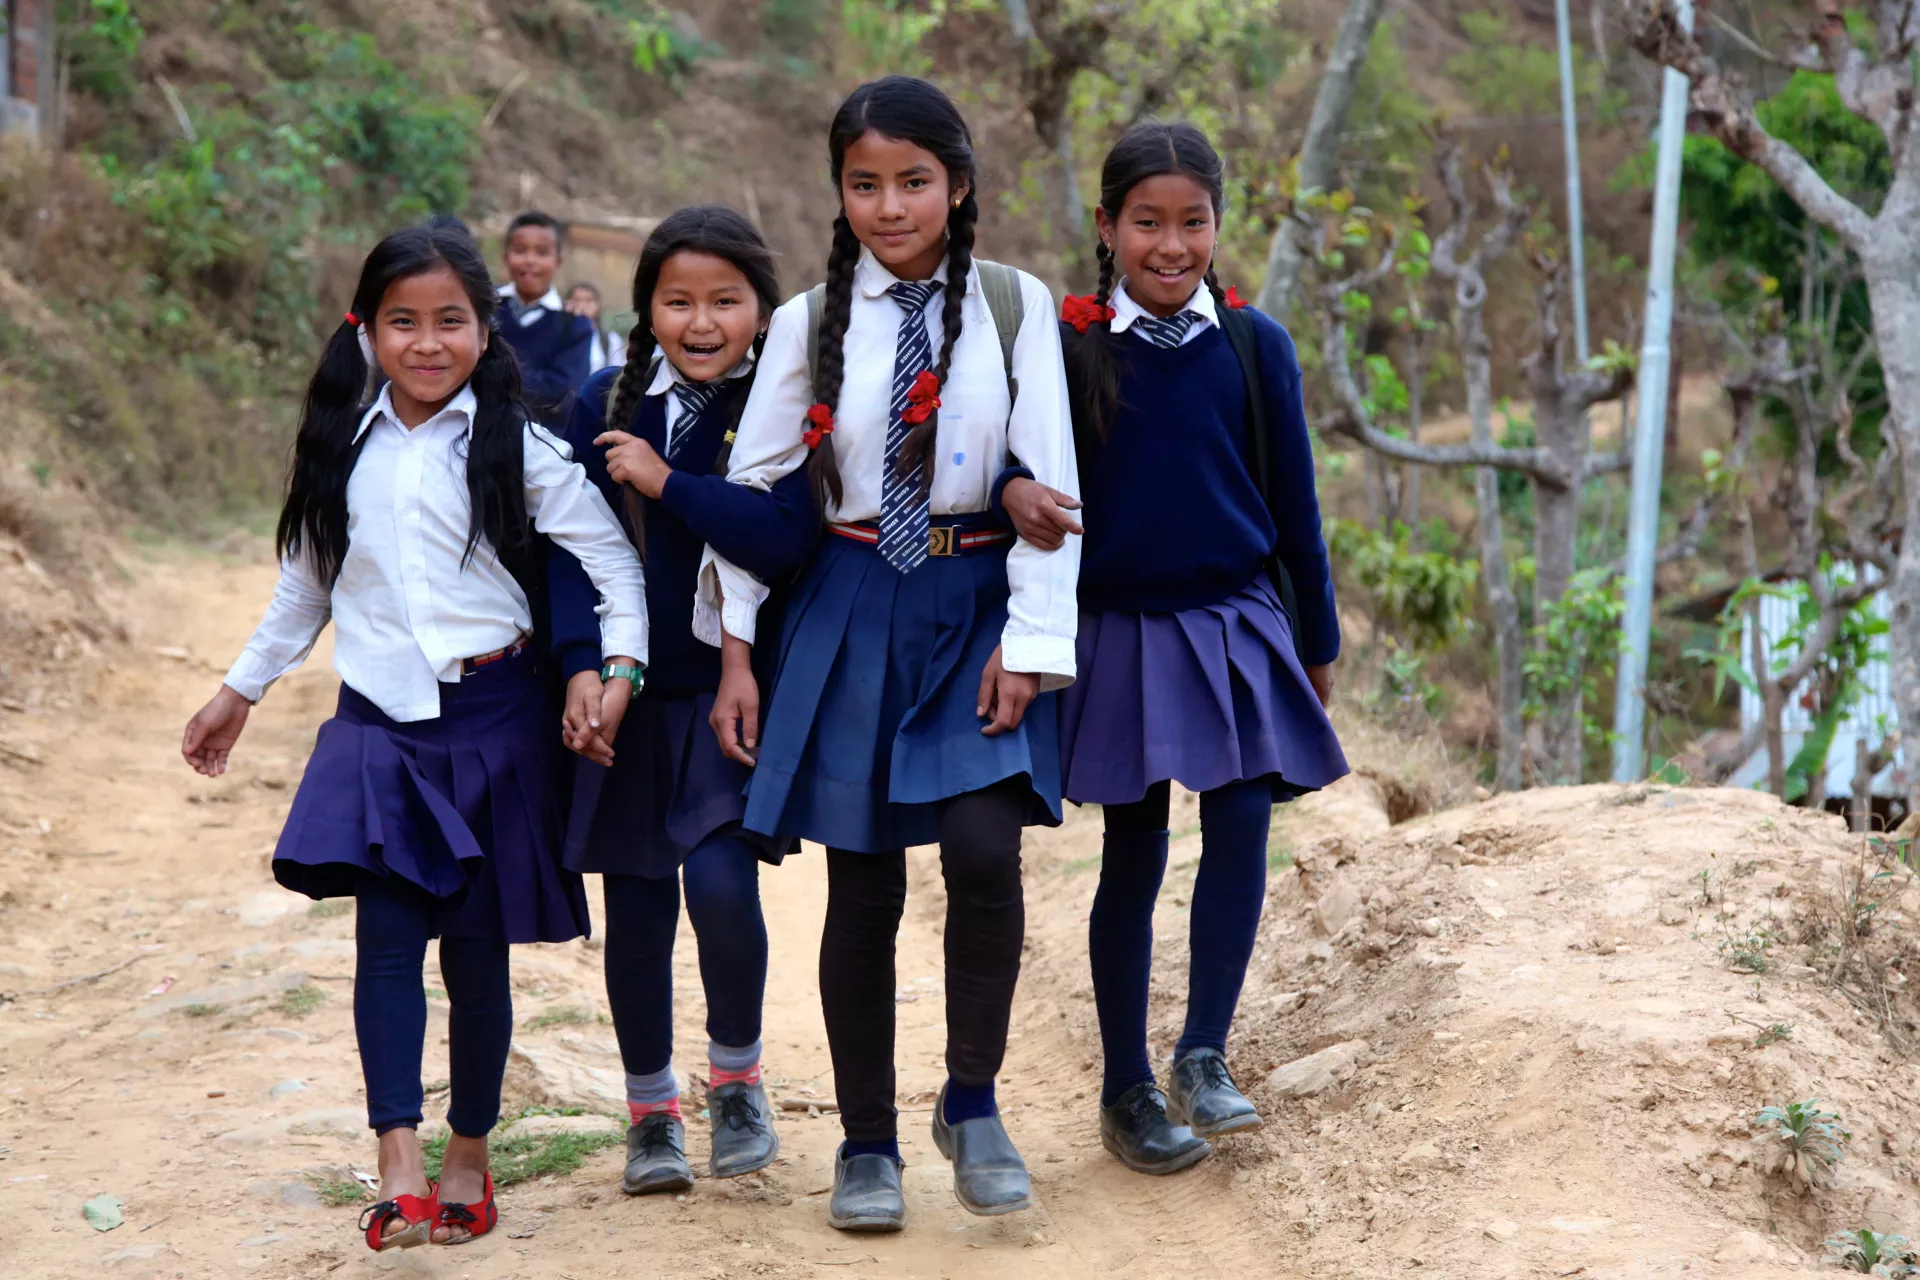 School girls in uniform going to school in Nepal village 